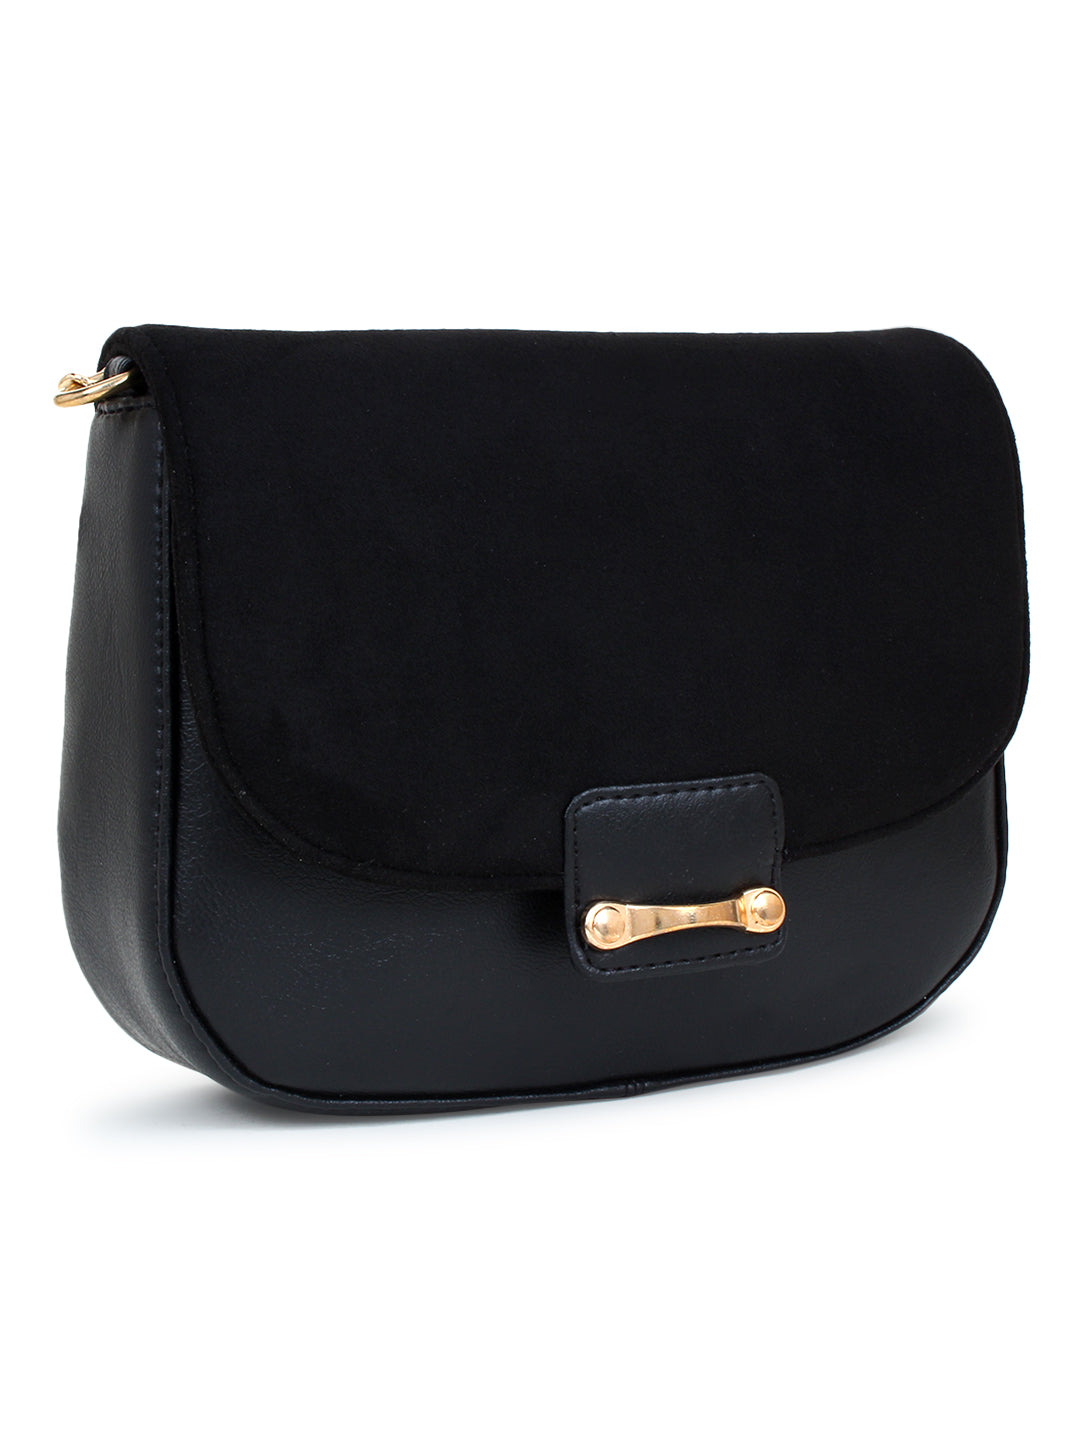 Women's Suede Sling Bag in (Black Color)